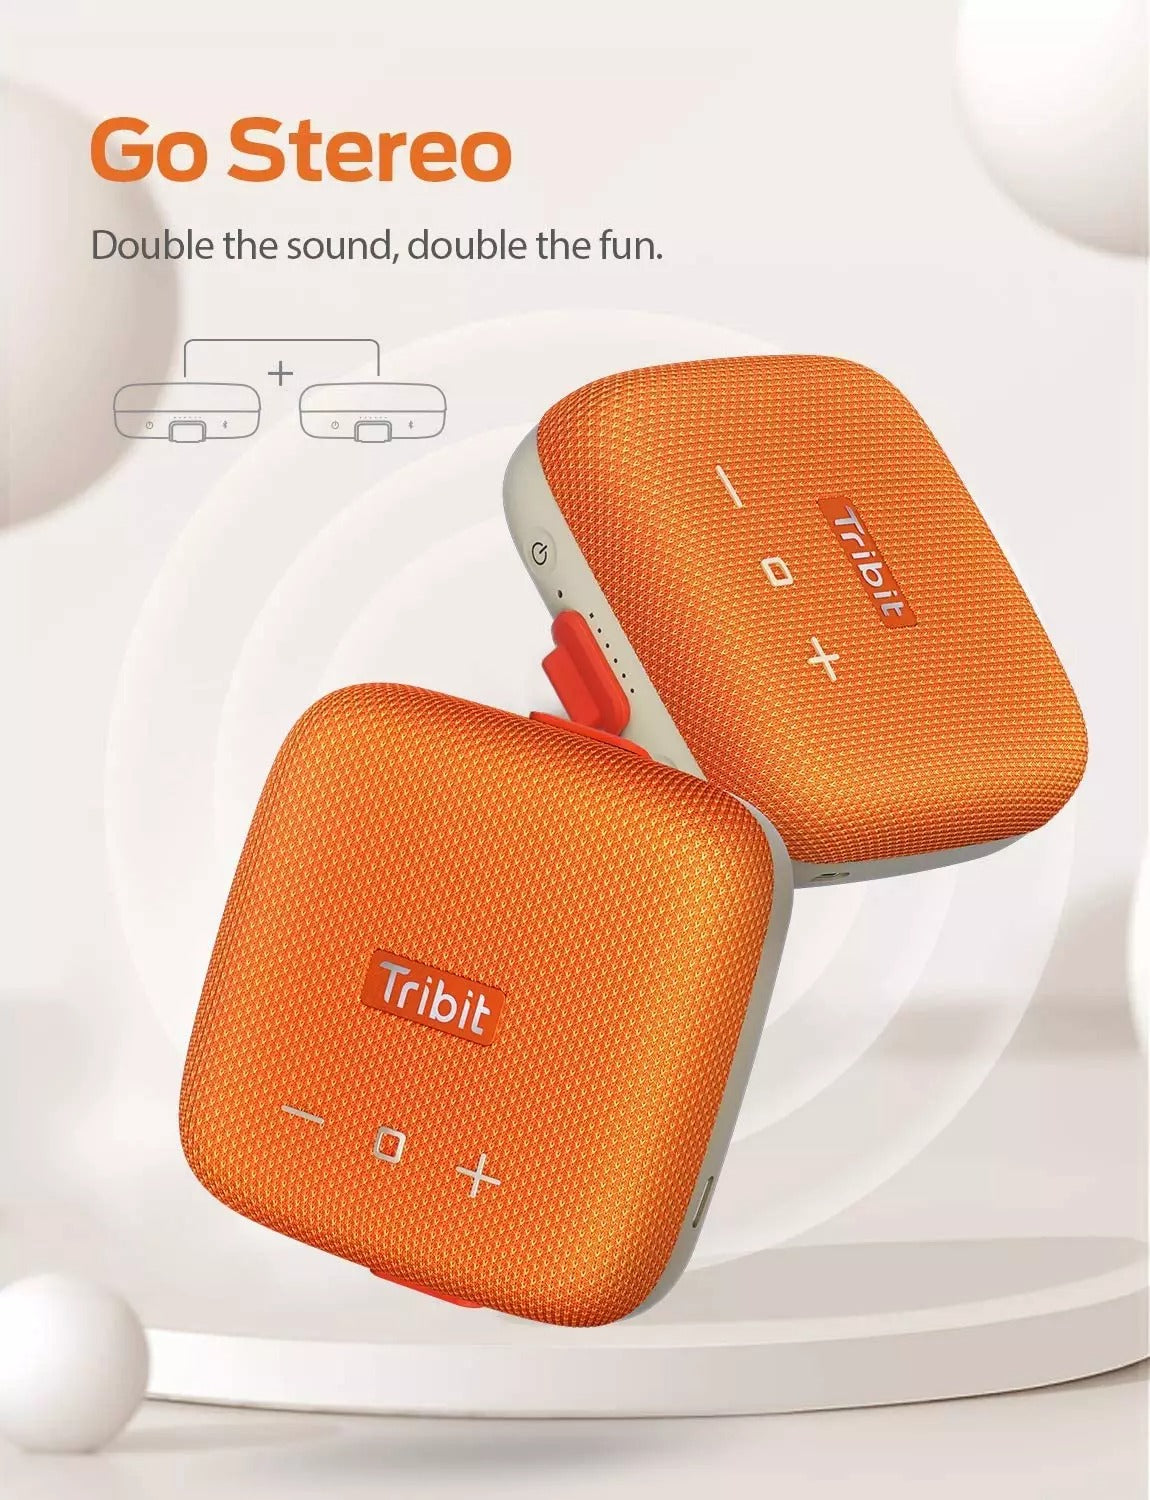 Tribit StormBox Micro Full Surround Sound, Enhanced Bass Speaker (Orange)